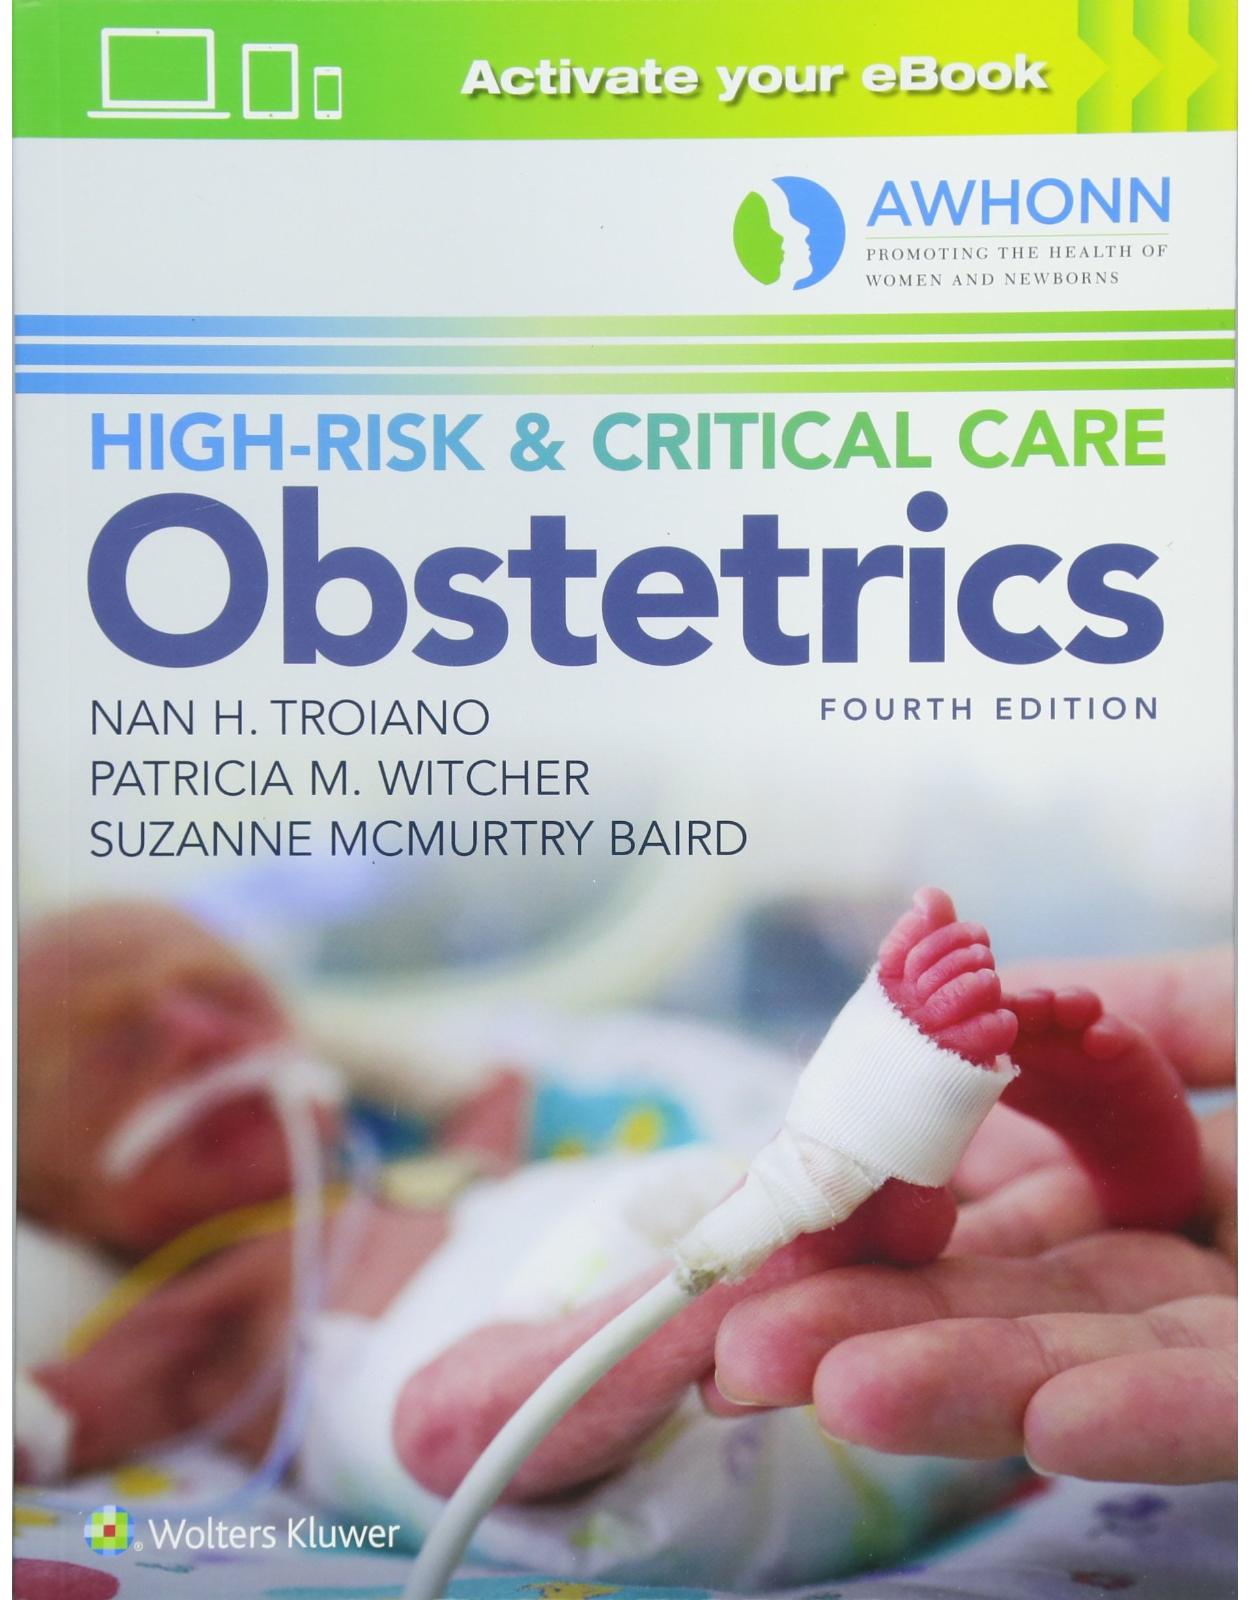 AWHONN’s High-Risk & Critical Care Obstetrics